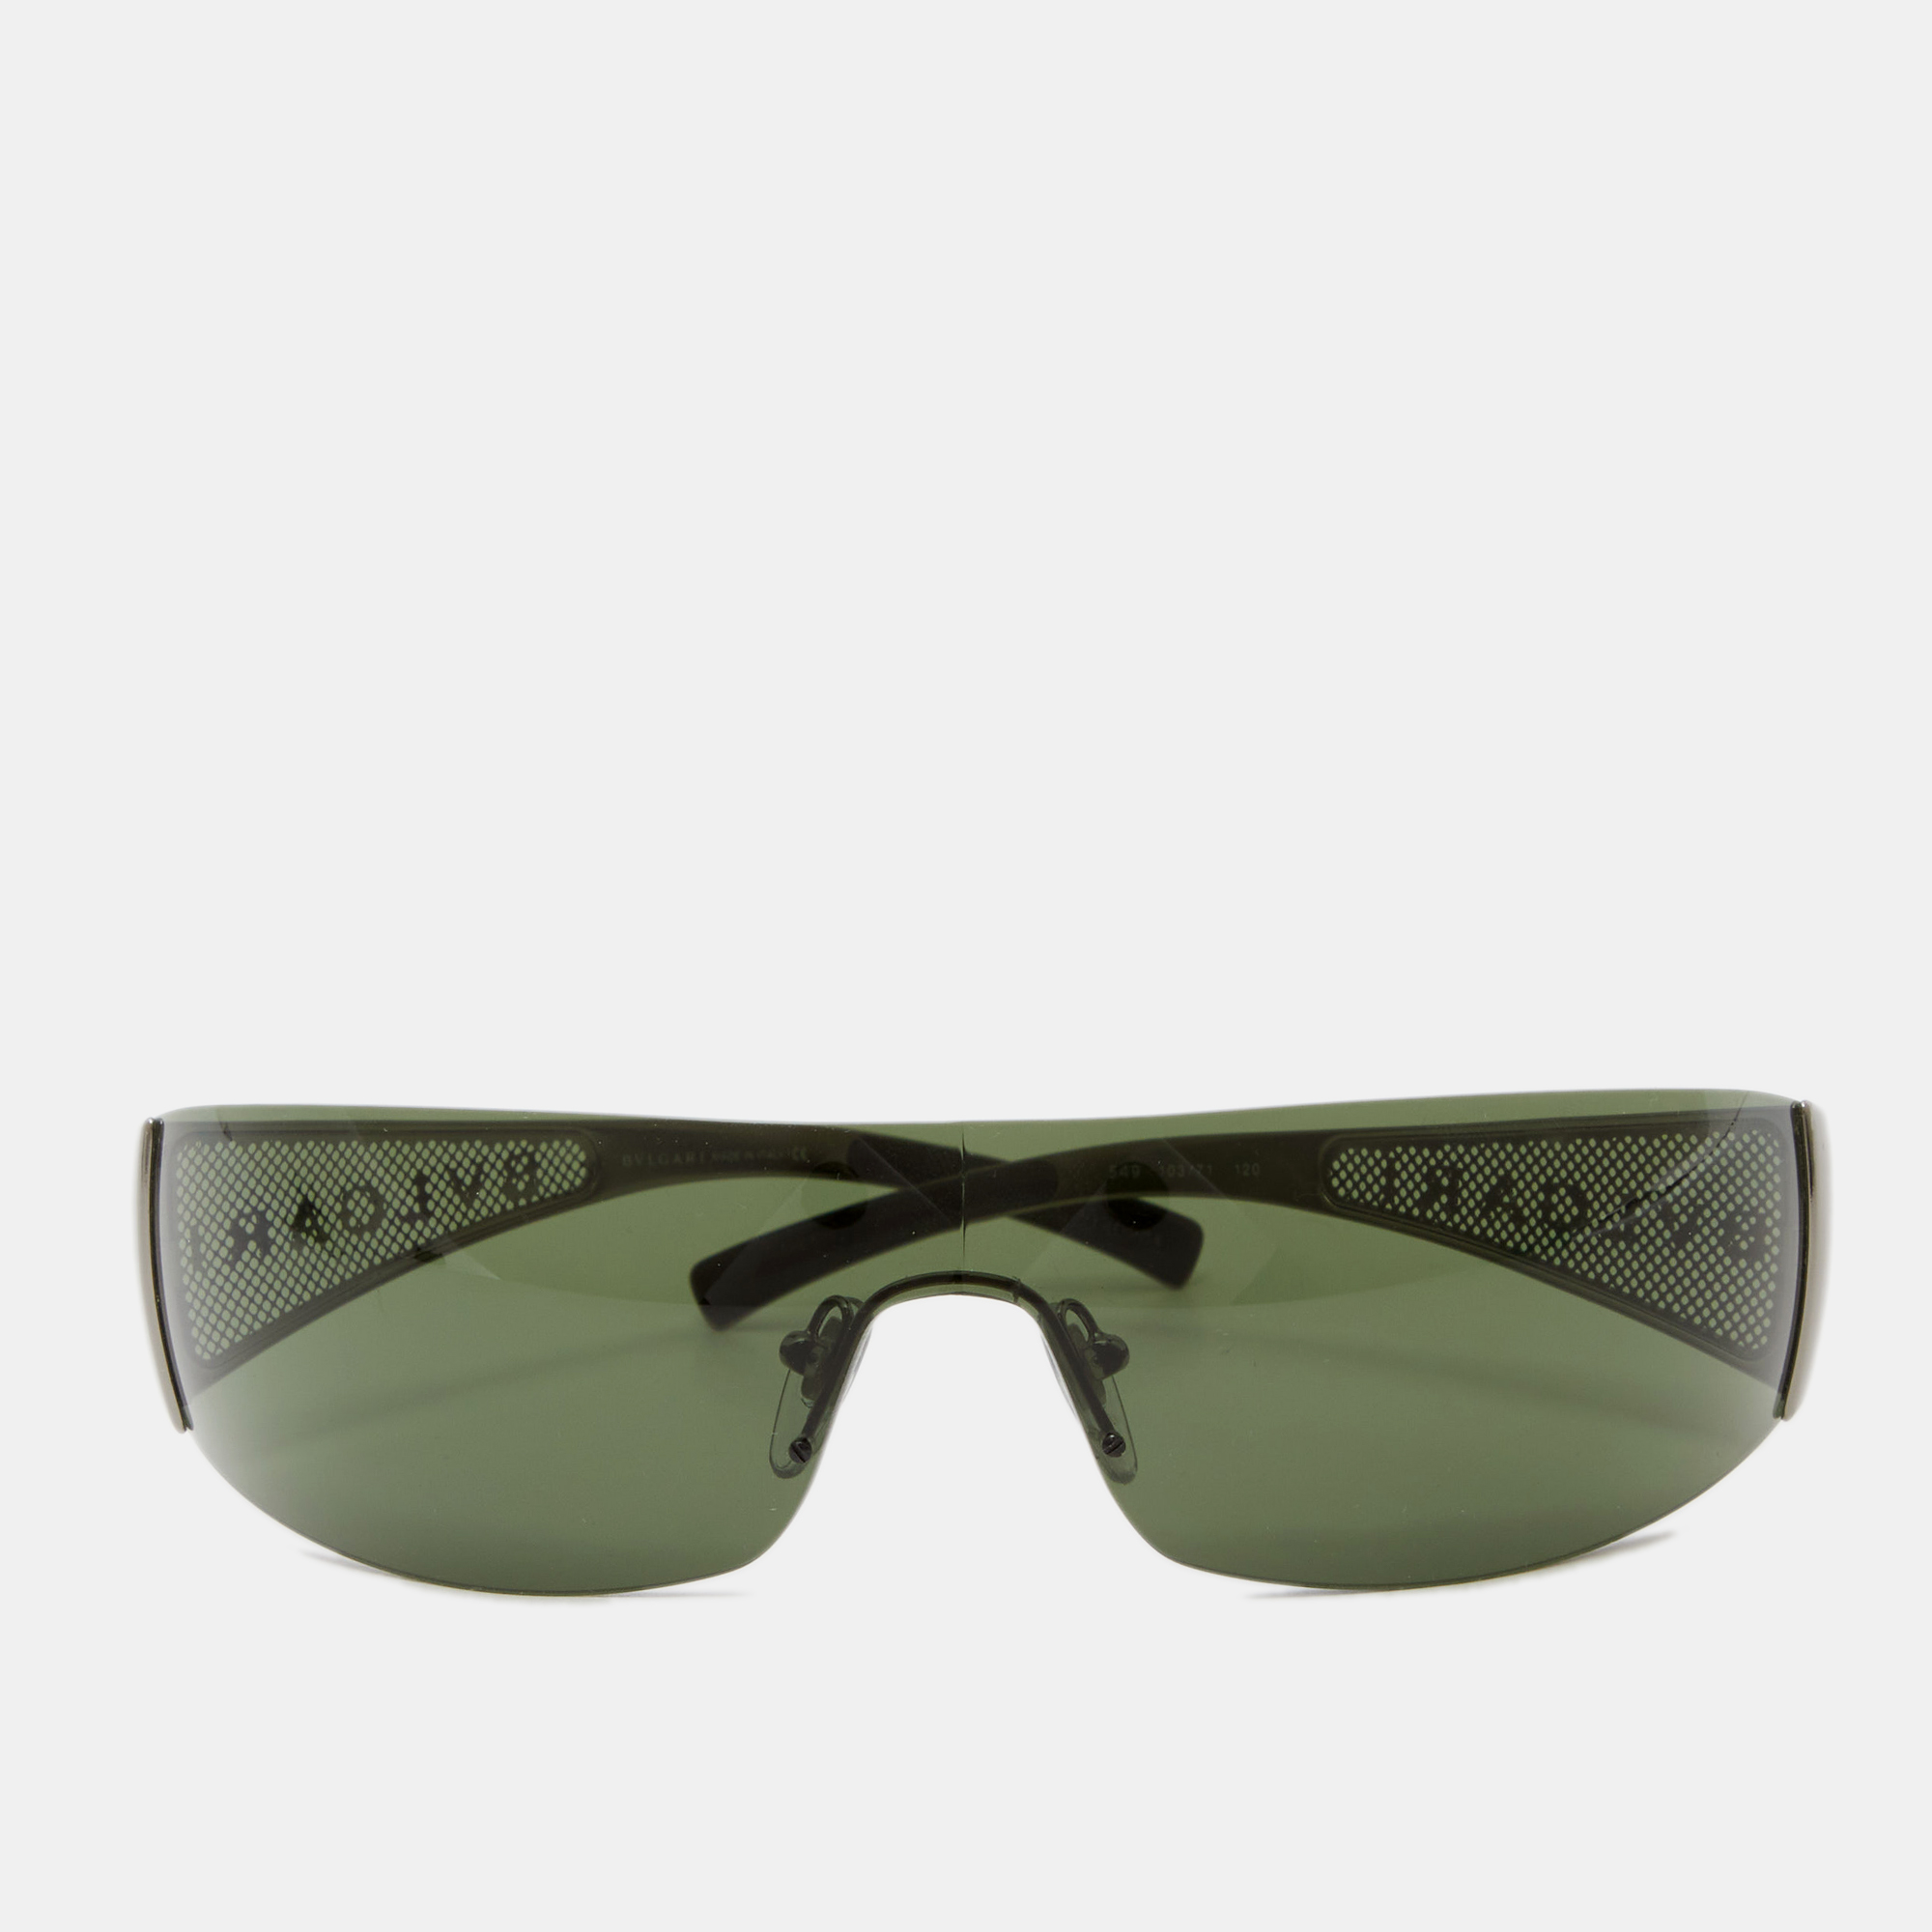 Bvlgari gunmetal tone/green 549 shield sunglasses